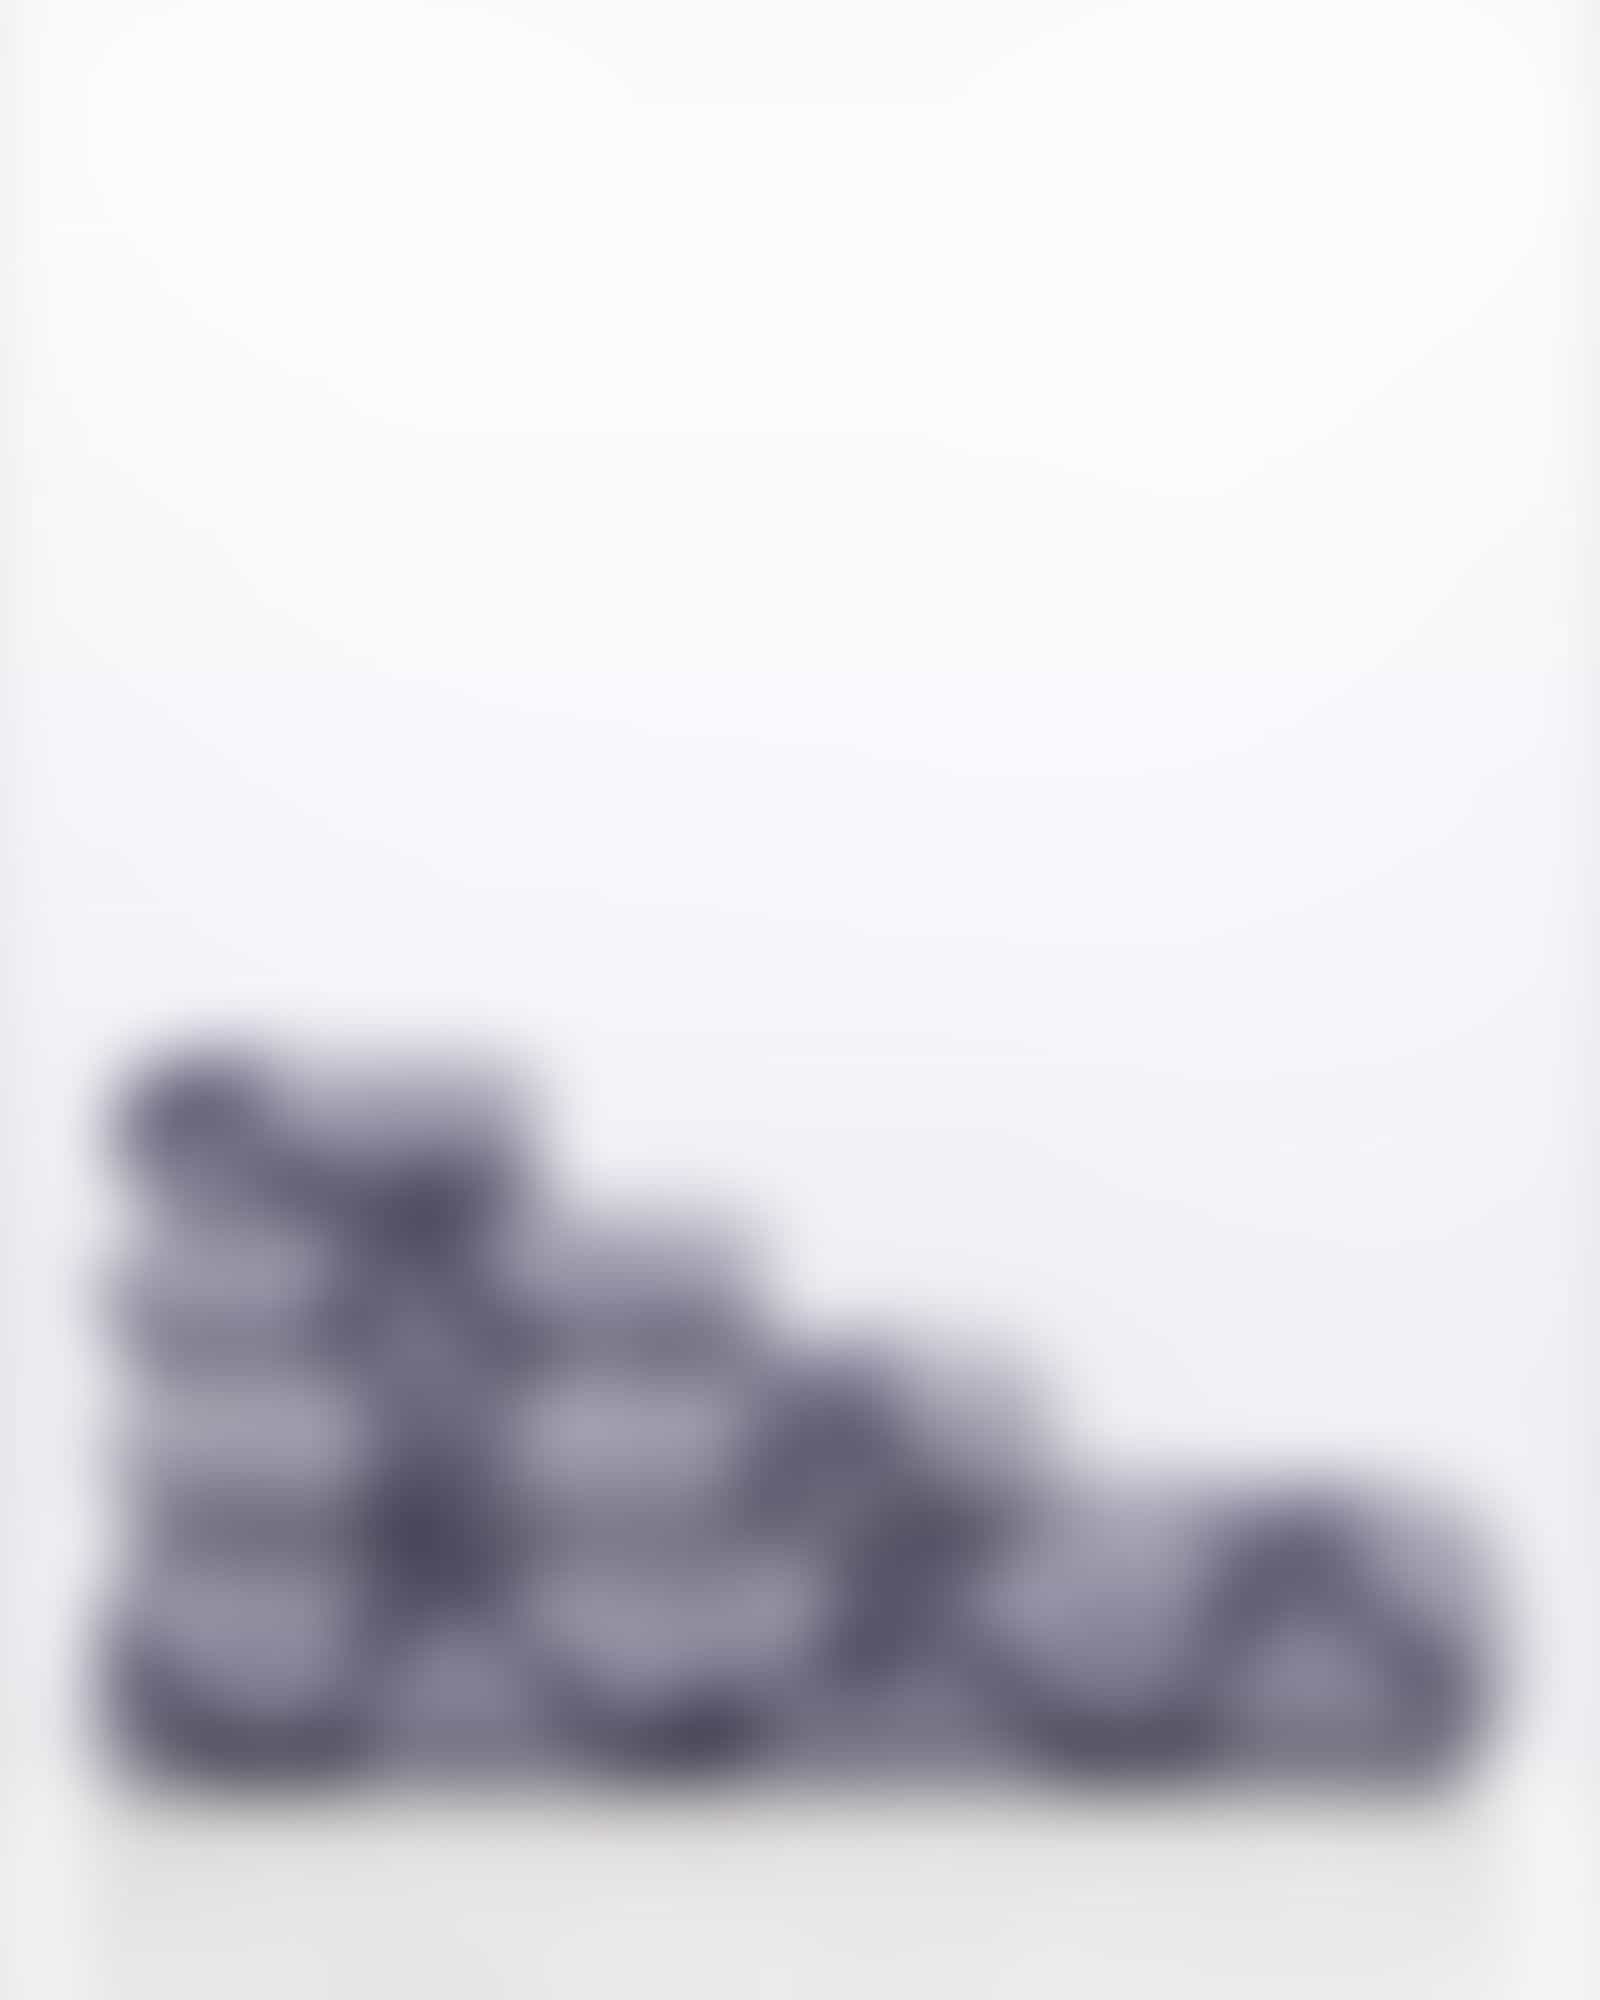 JOOP! Handtücher Classic Cornflower 1611 - Farbe: denim - 19